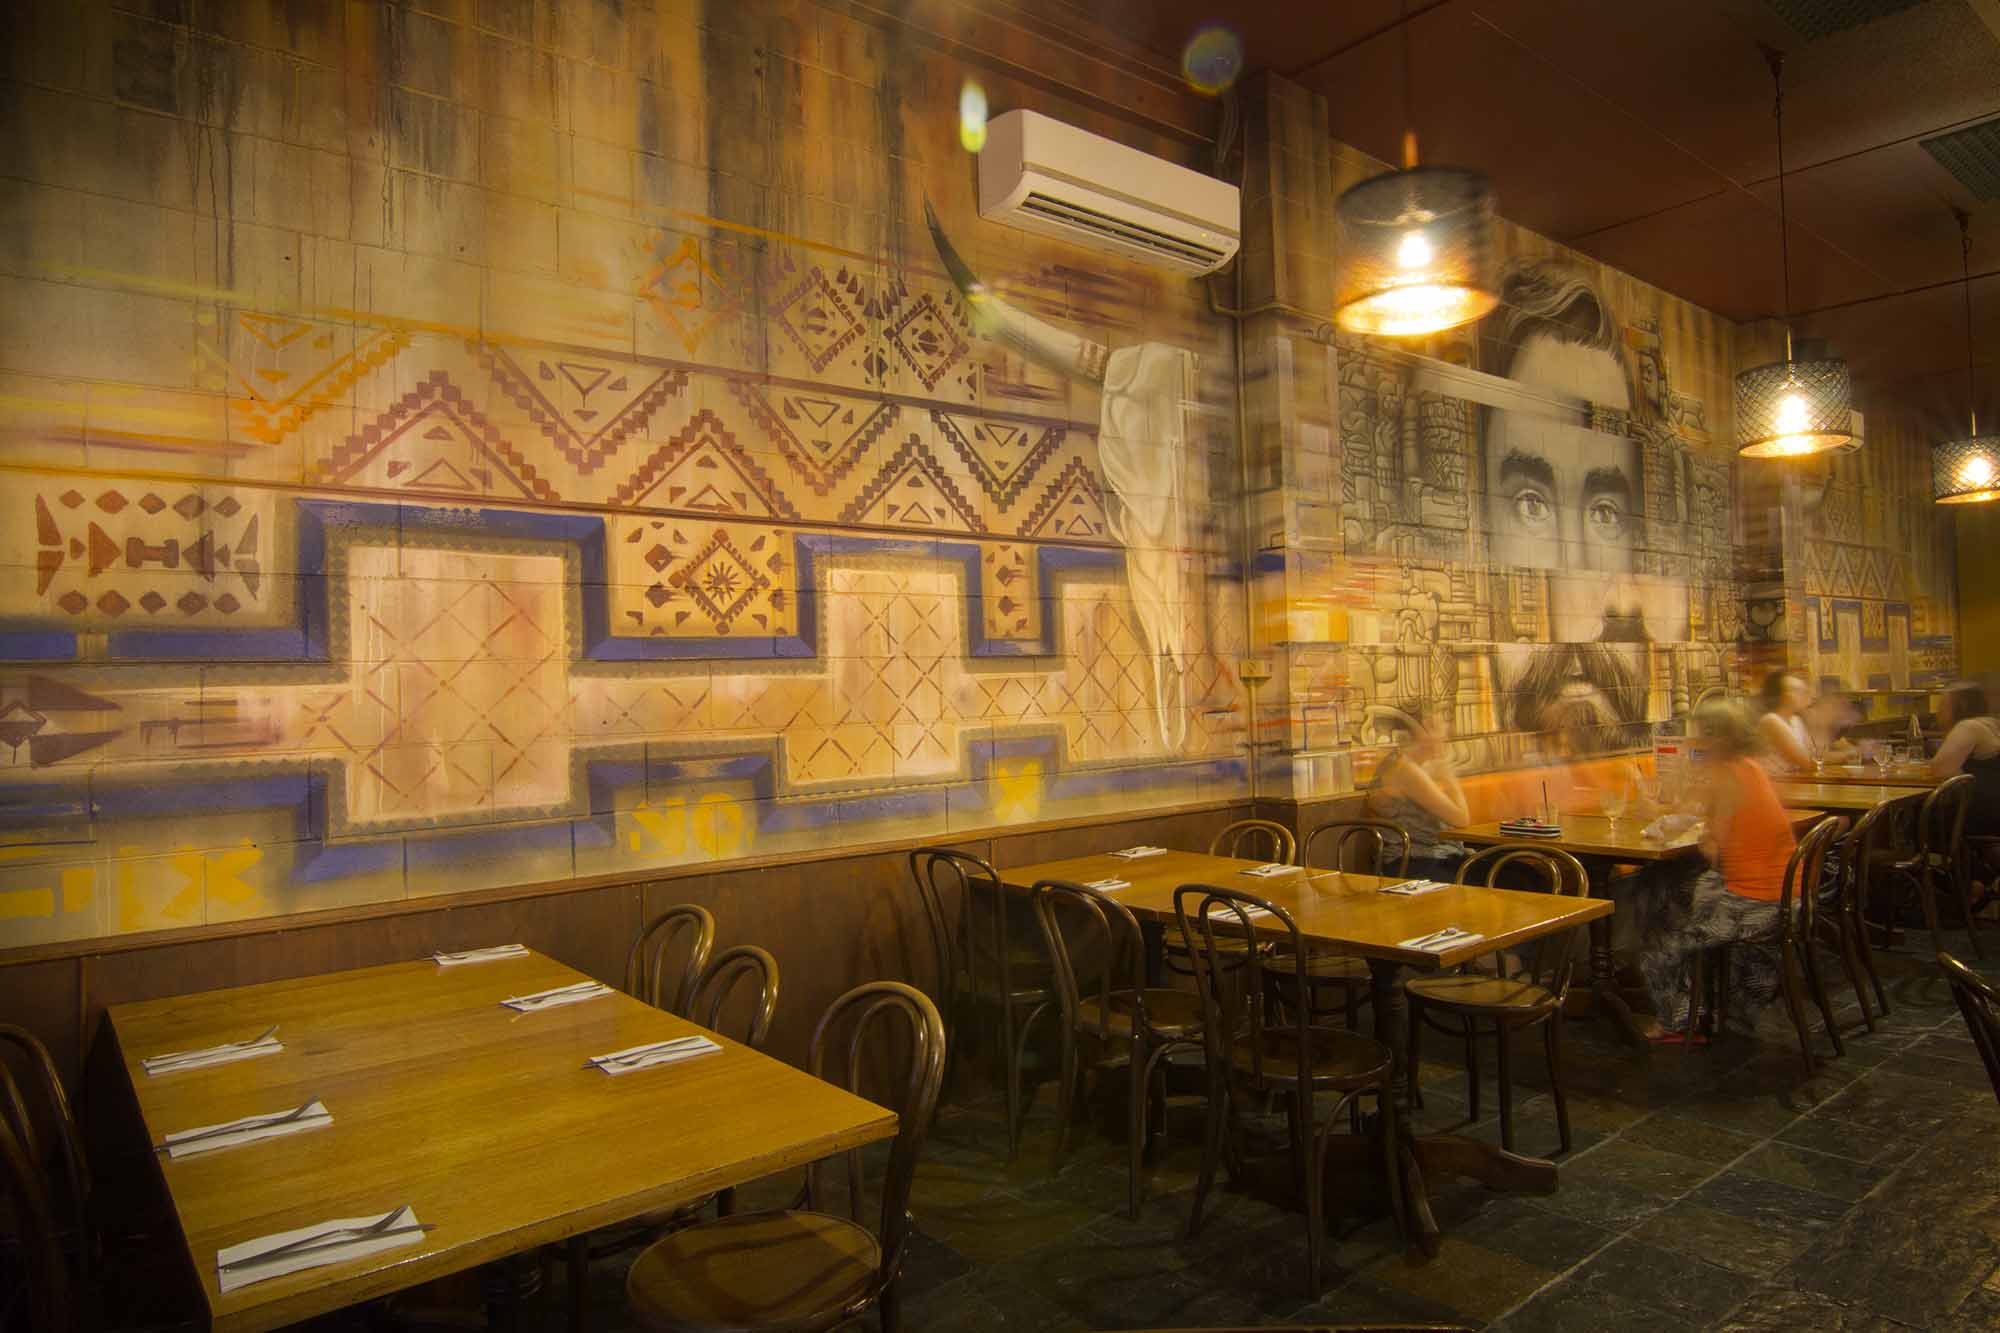 Pyramid graffiti spark up the interior of a Mexican restaurant.